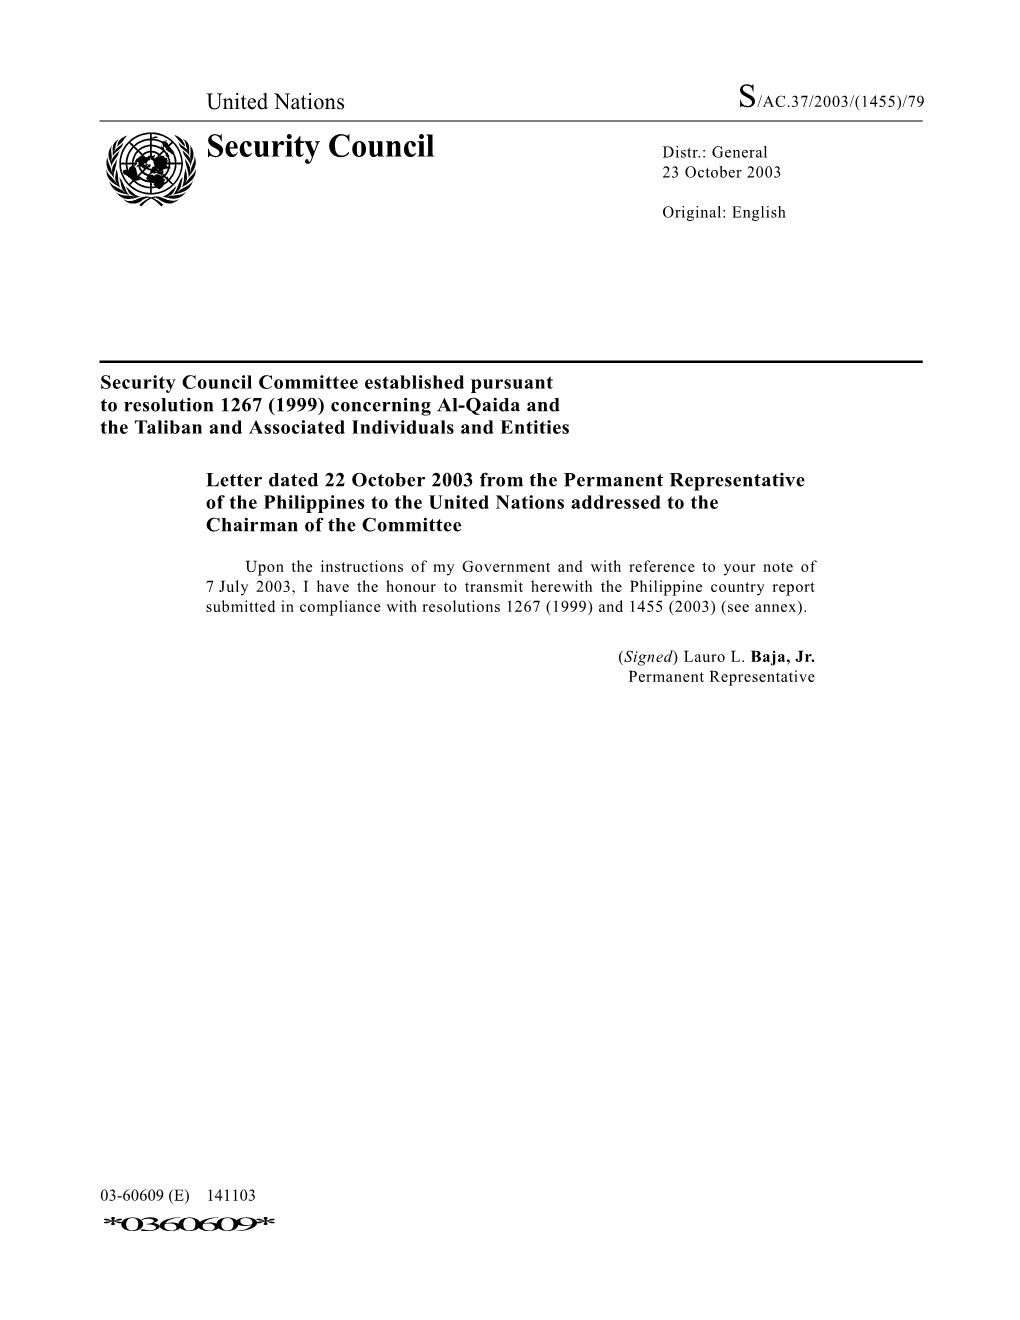 UN Security Council Resolutions 1267 and 1455 Al-Qaeda Sanctions Committee October 2003